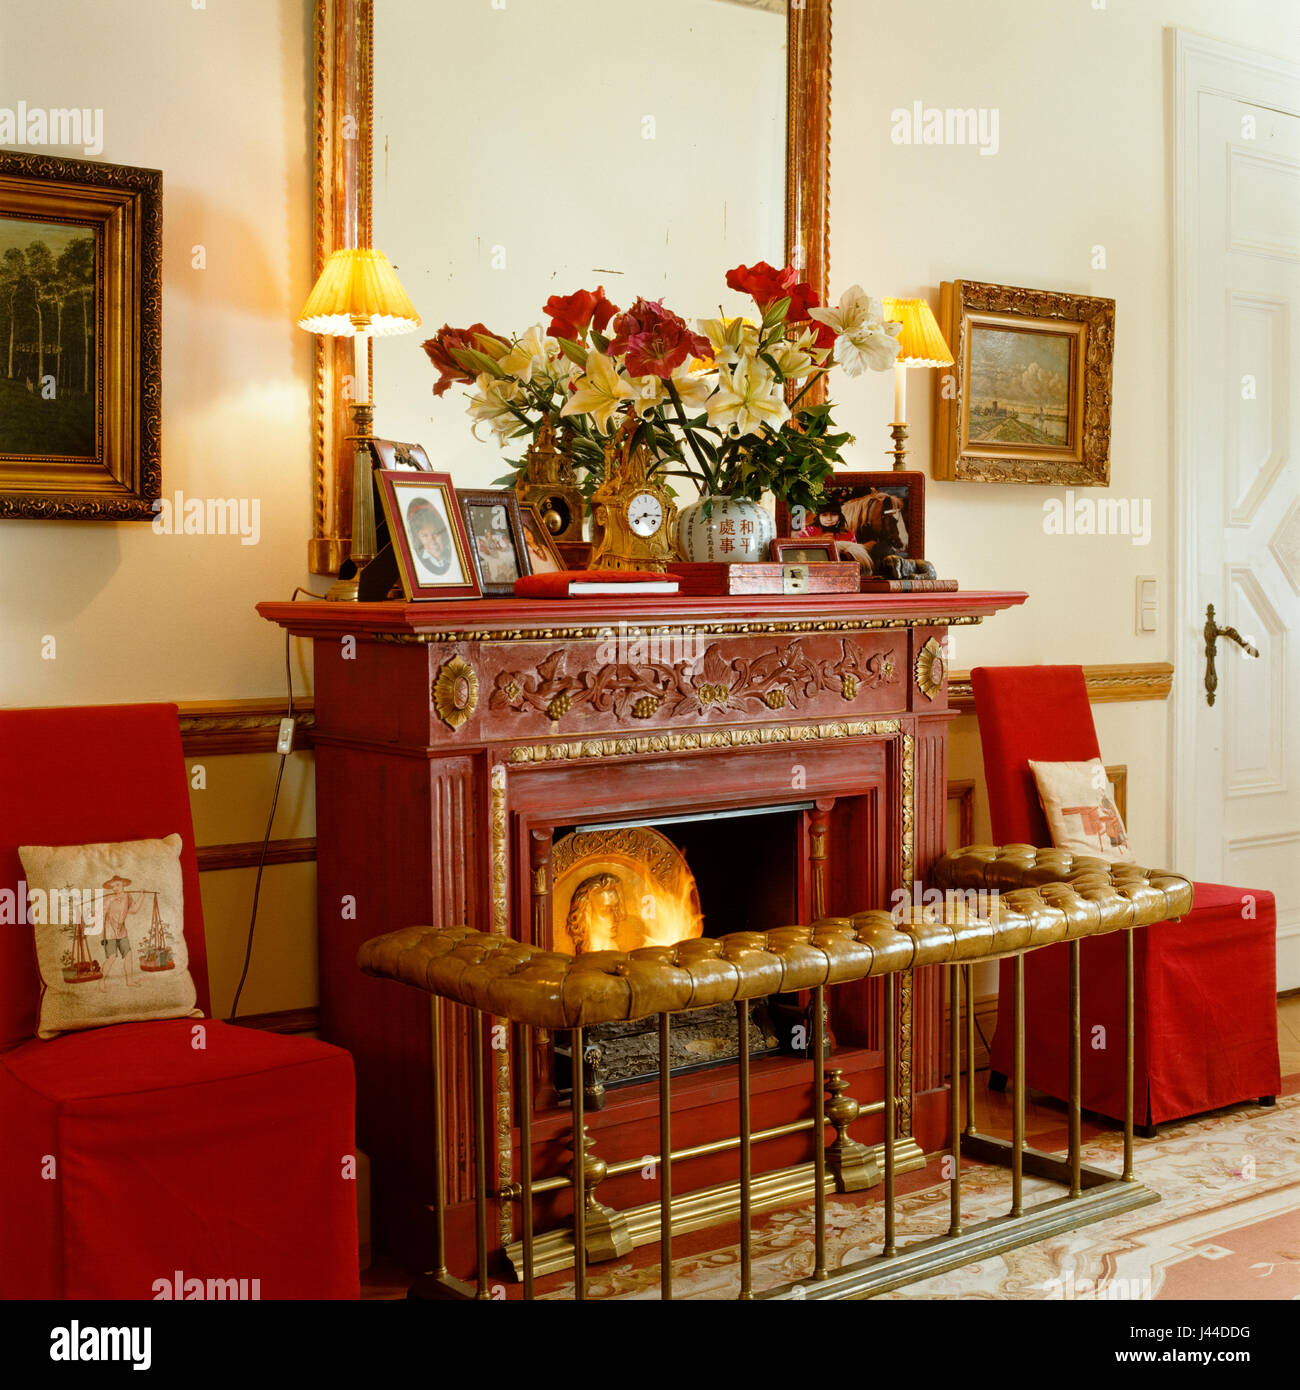 Lit oriental fireplace Stock Photo